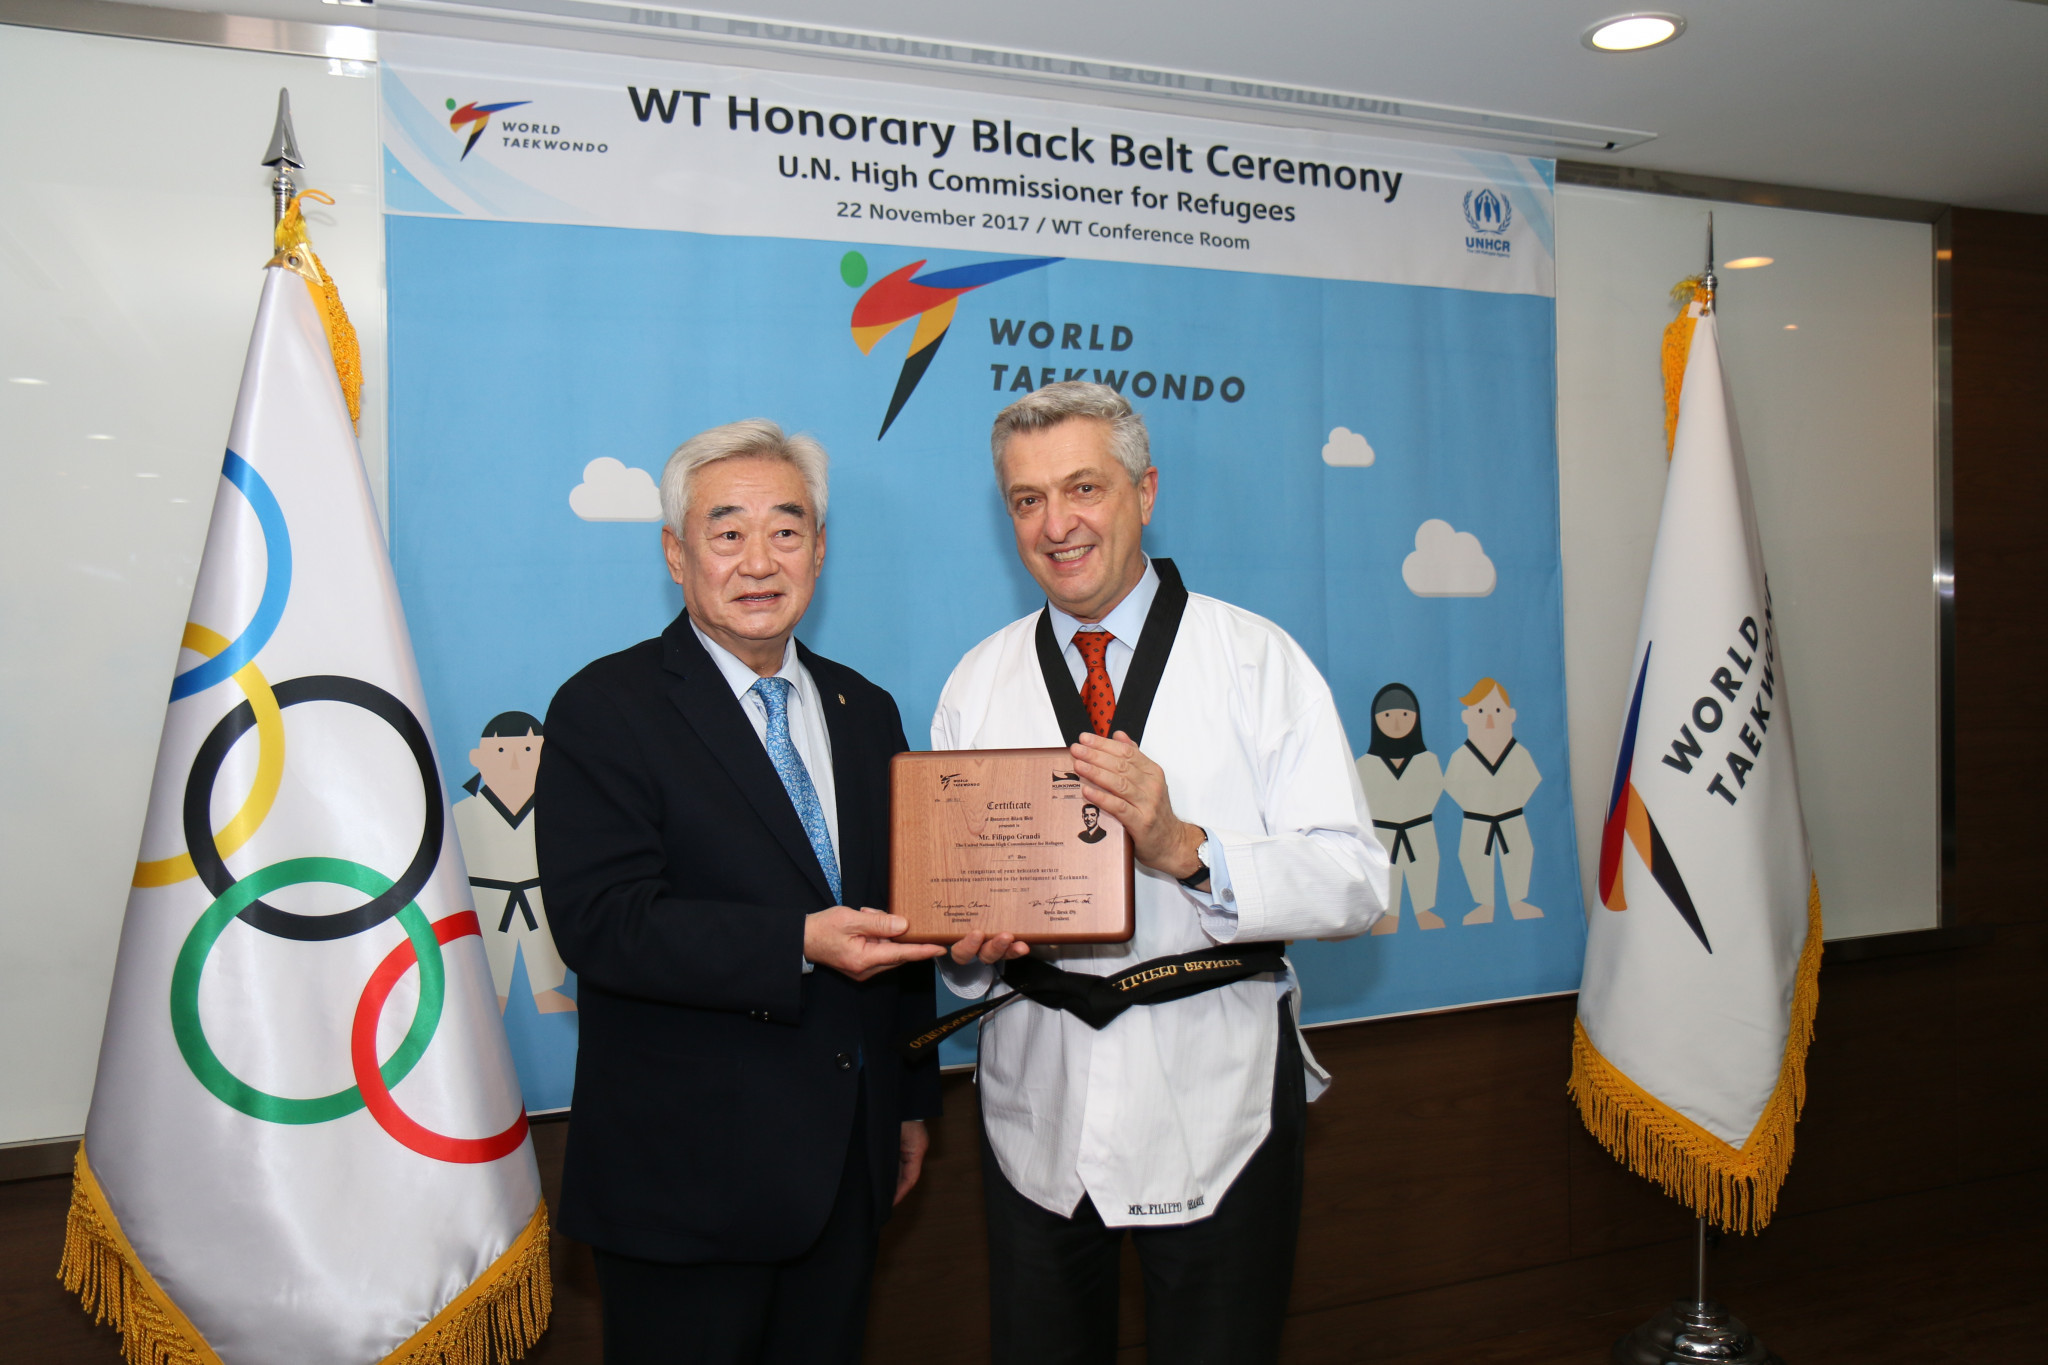 Choue awards taekwondo black belt to UNHCR High Commissioner for Refugees